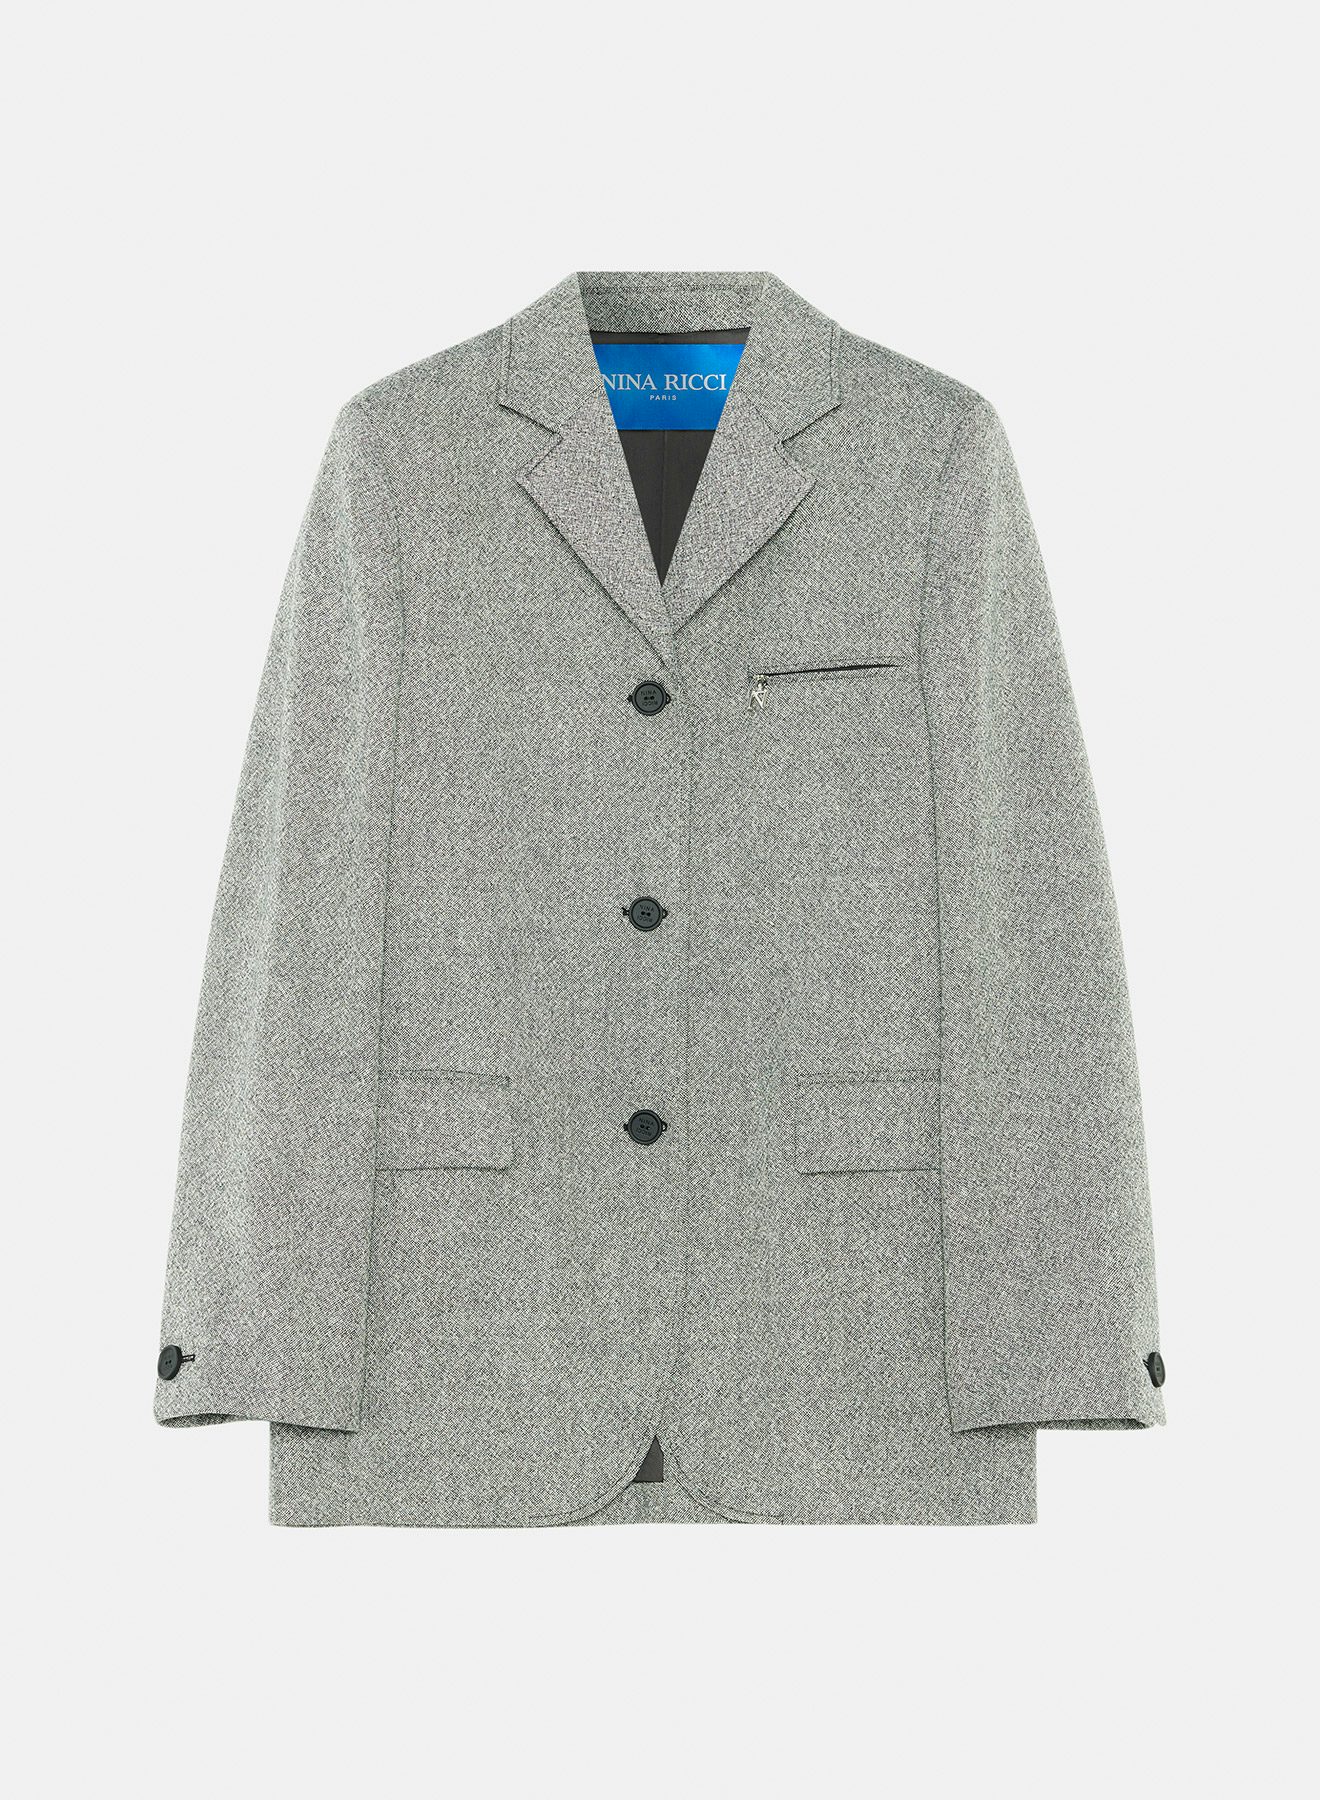 Speckled wool jacket black white - Nina Ricci